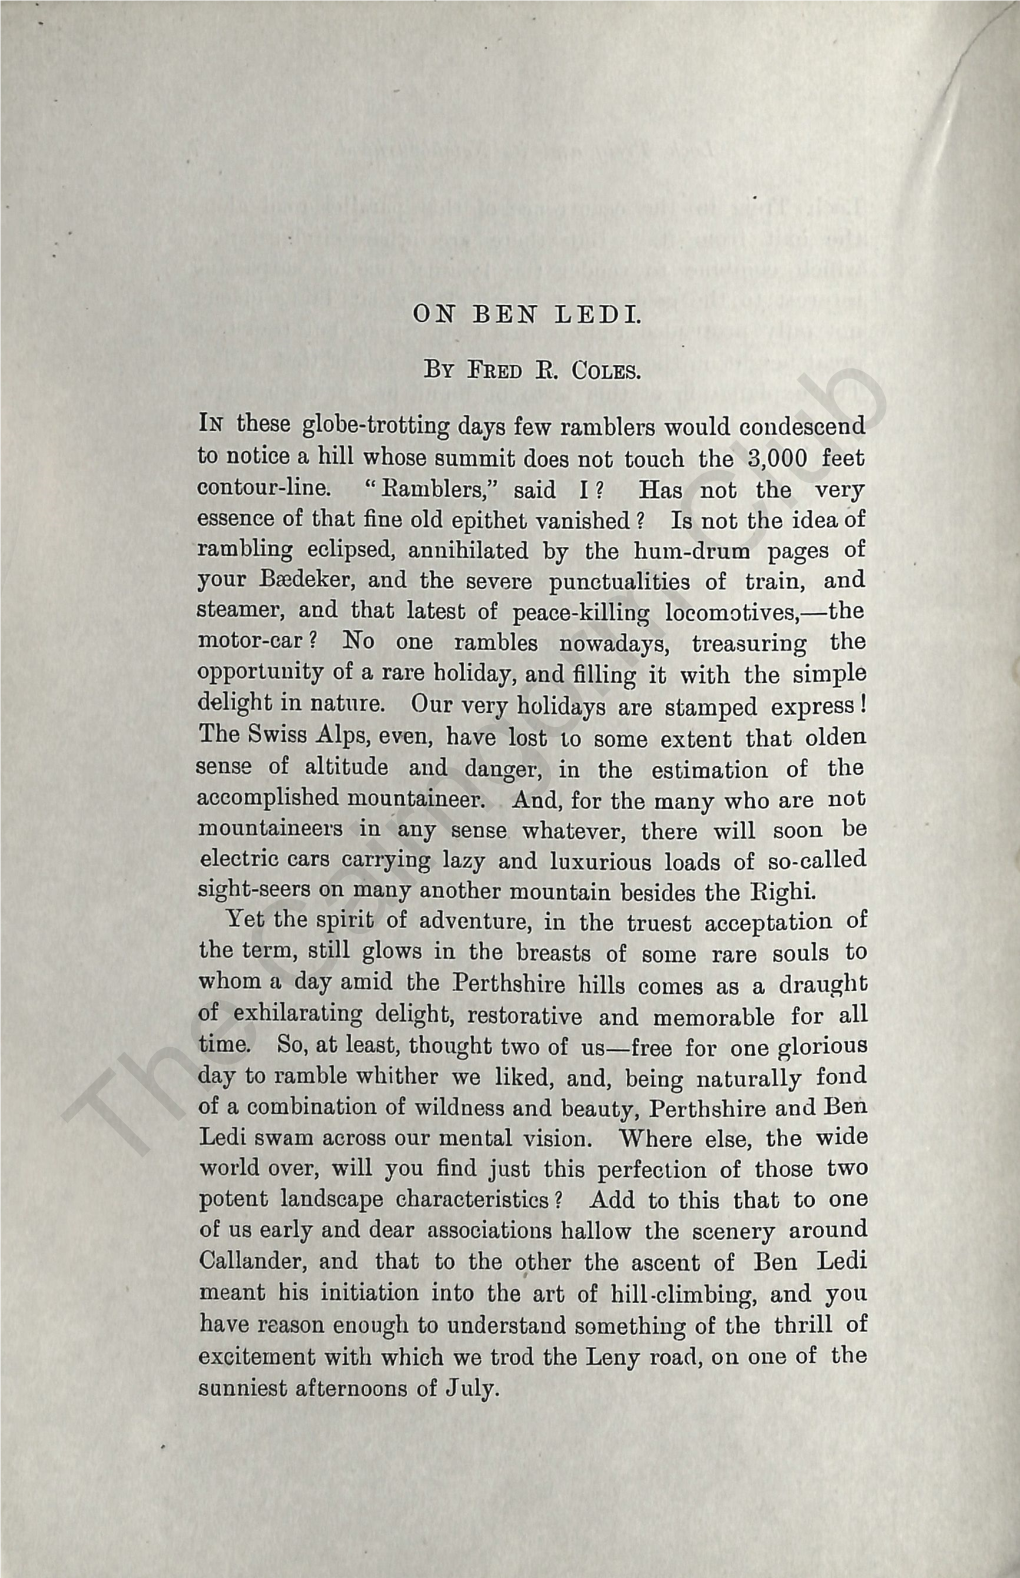 The Cairngorm Club Journal 025, 1905